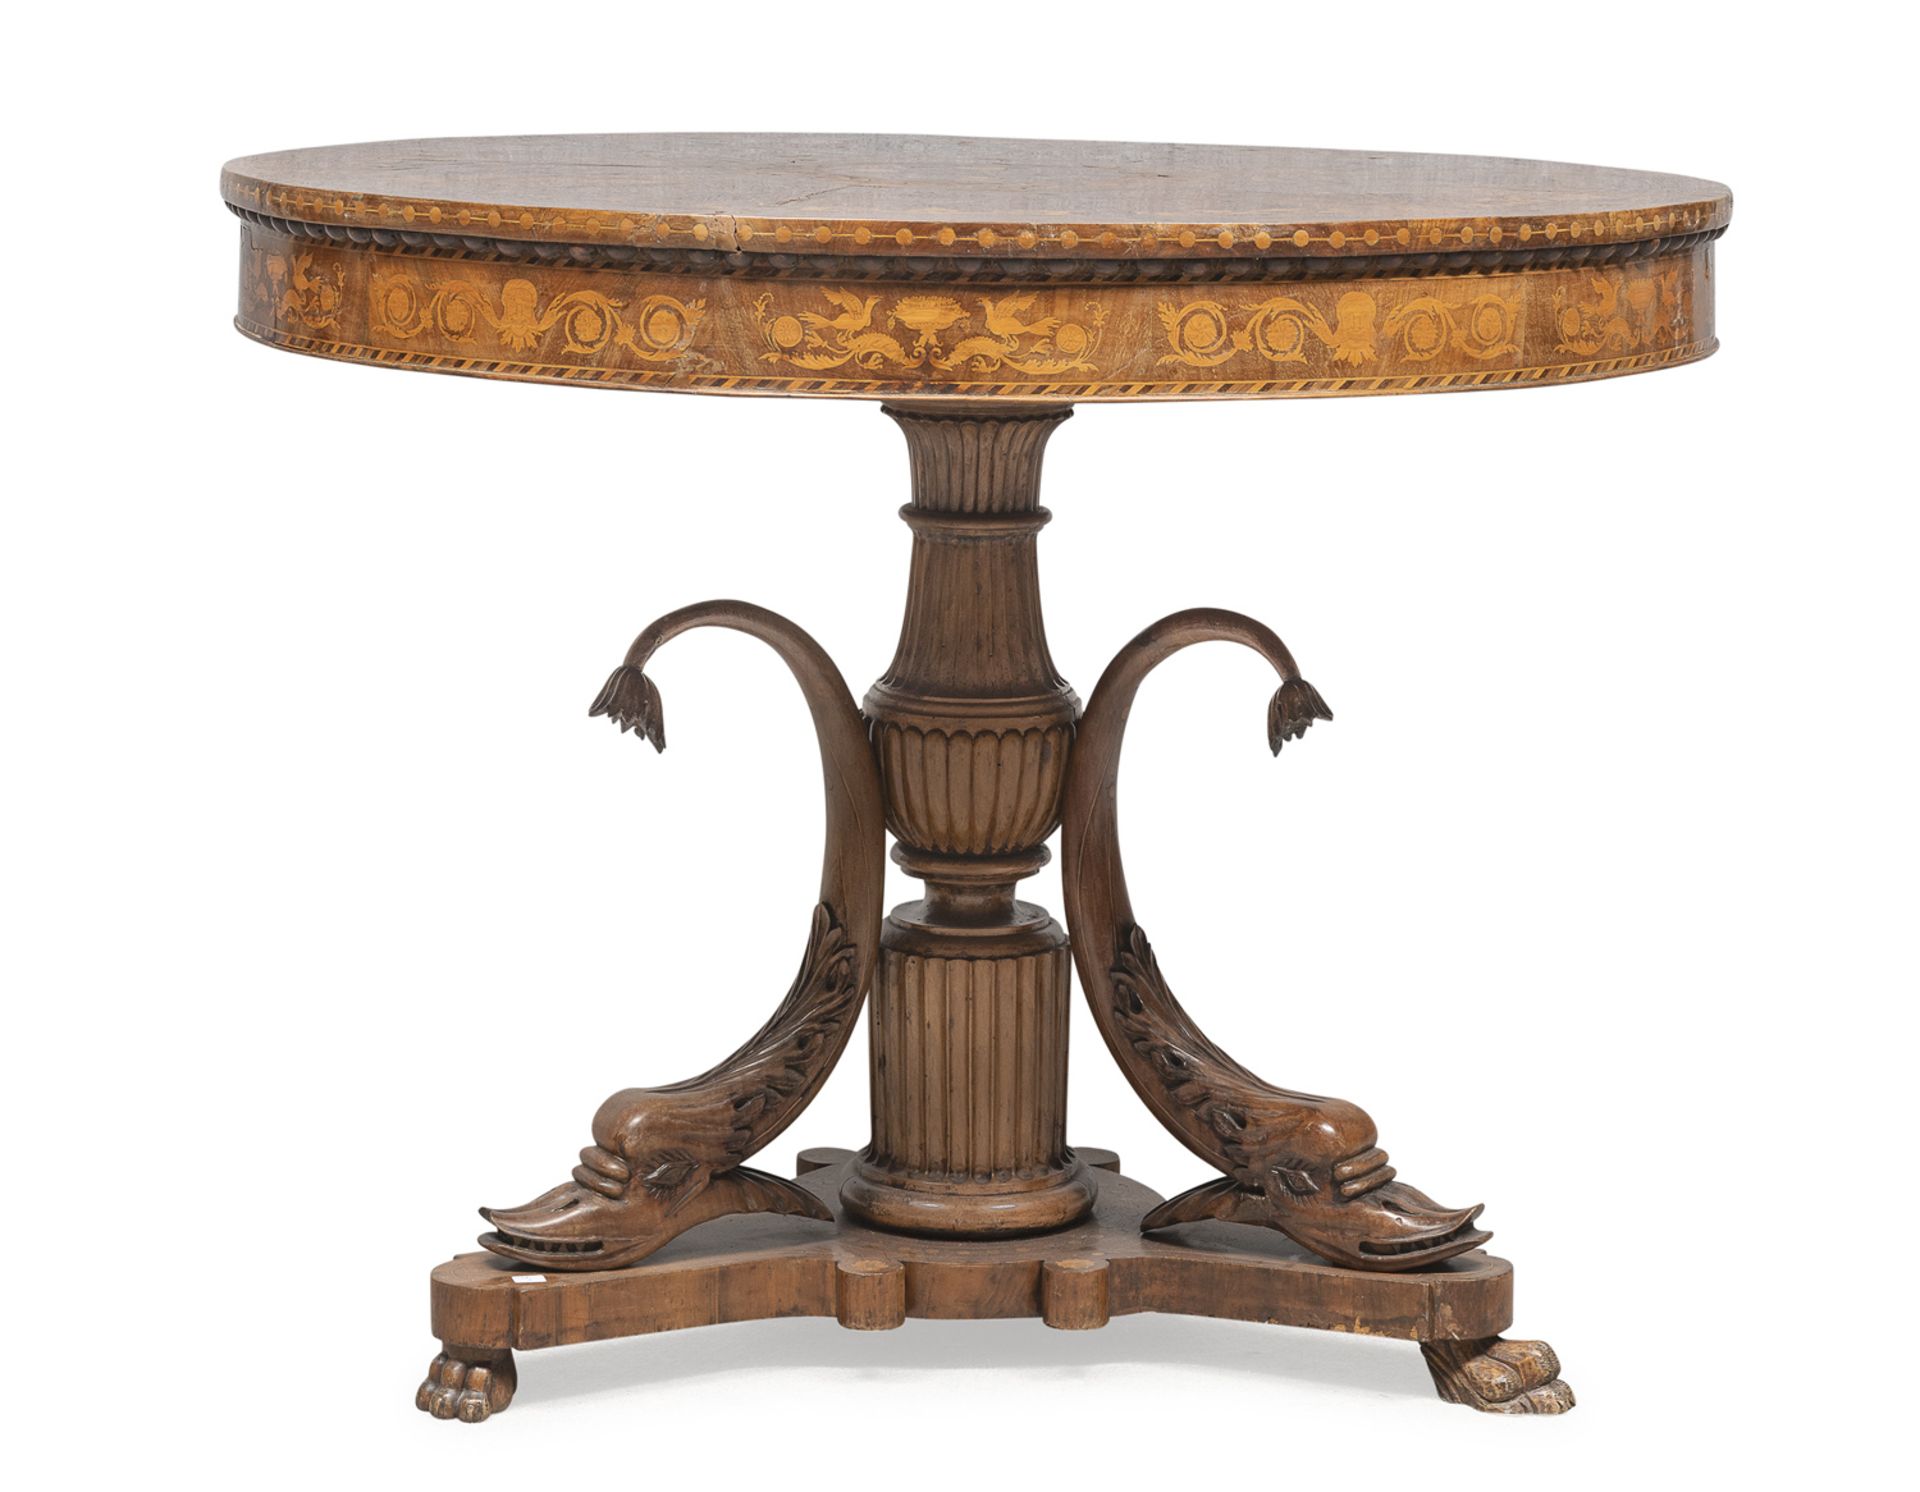 BEAUTIFUL CIRCULAR TABLE IN WALNUT FIRST HALF 19TH CENTURY